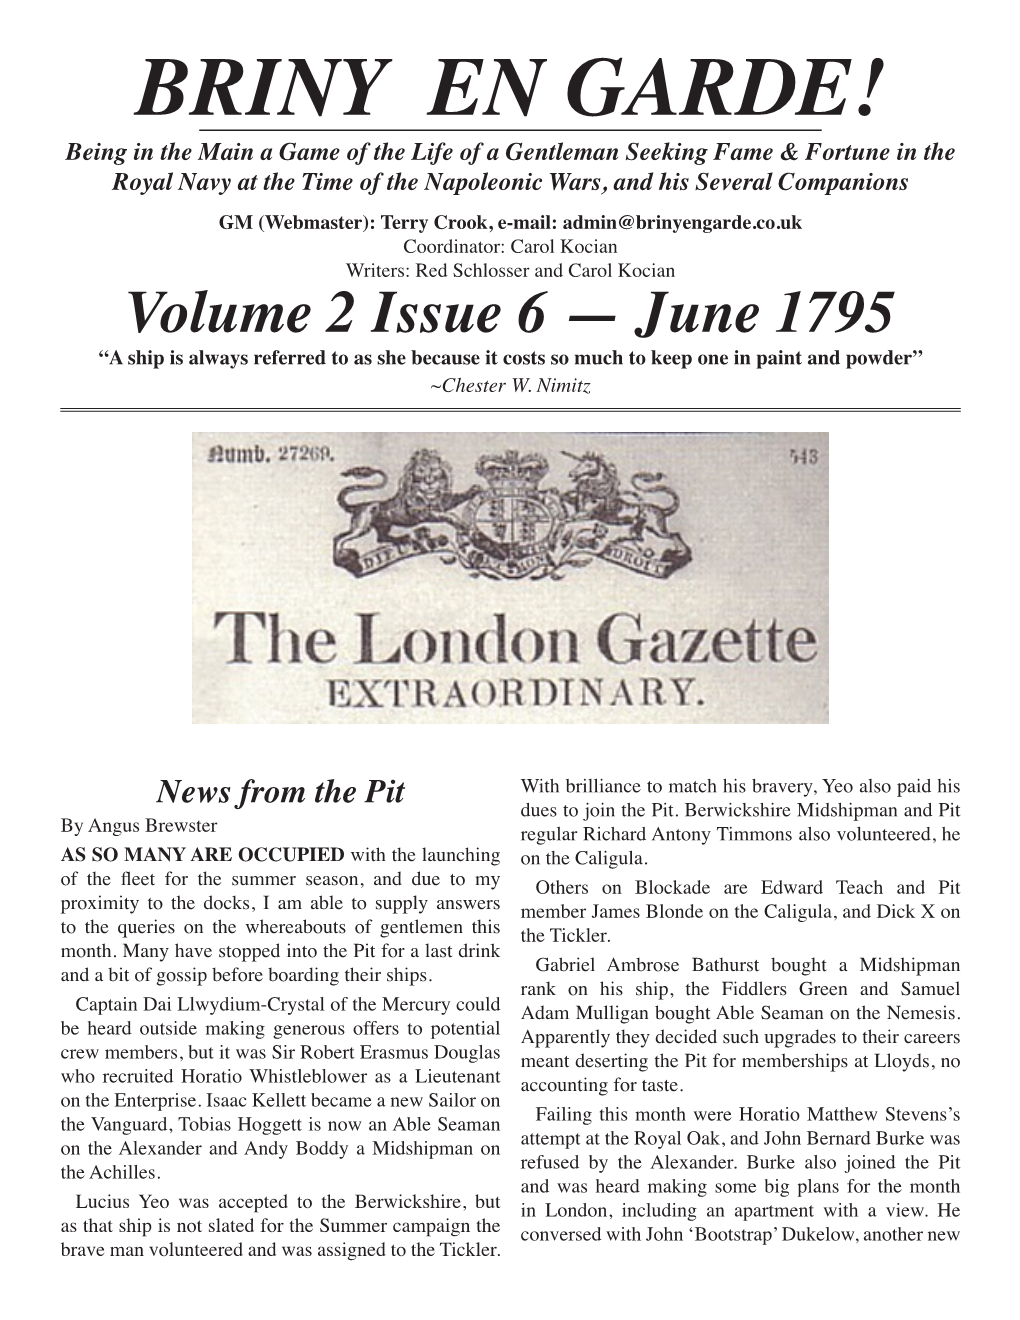 London Gazette June 1795